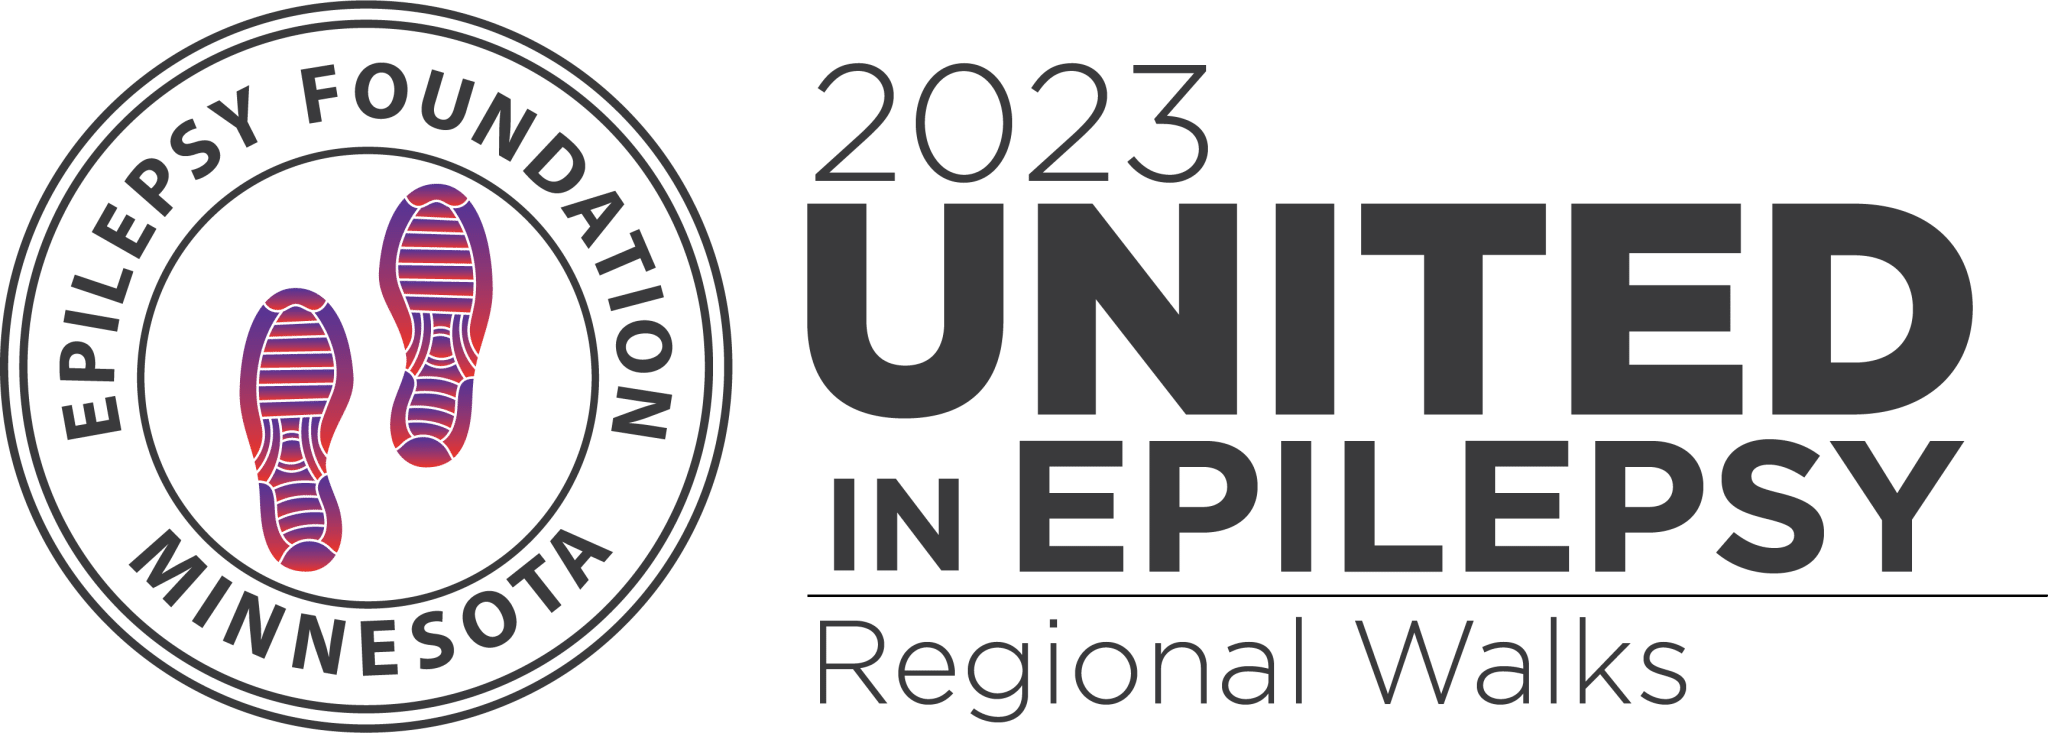 United in Epilepsy Regional Walks Epilepsy Foundation of Minnesota